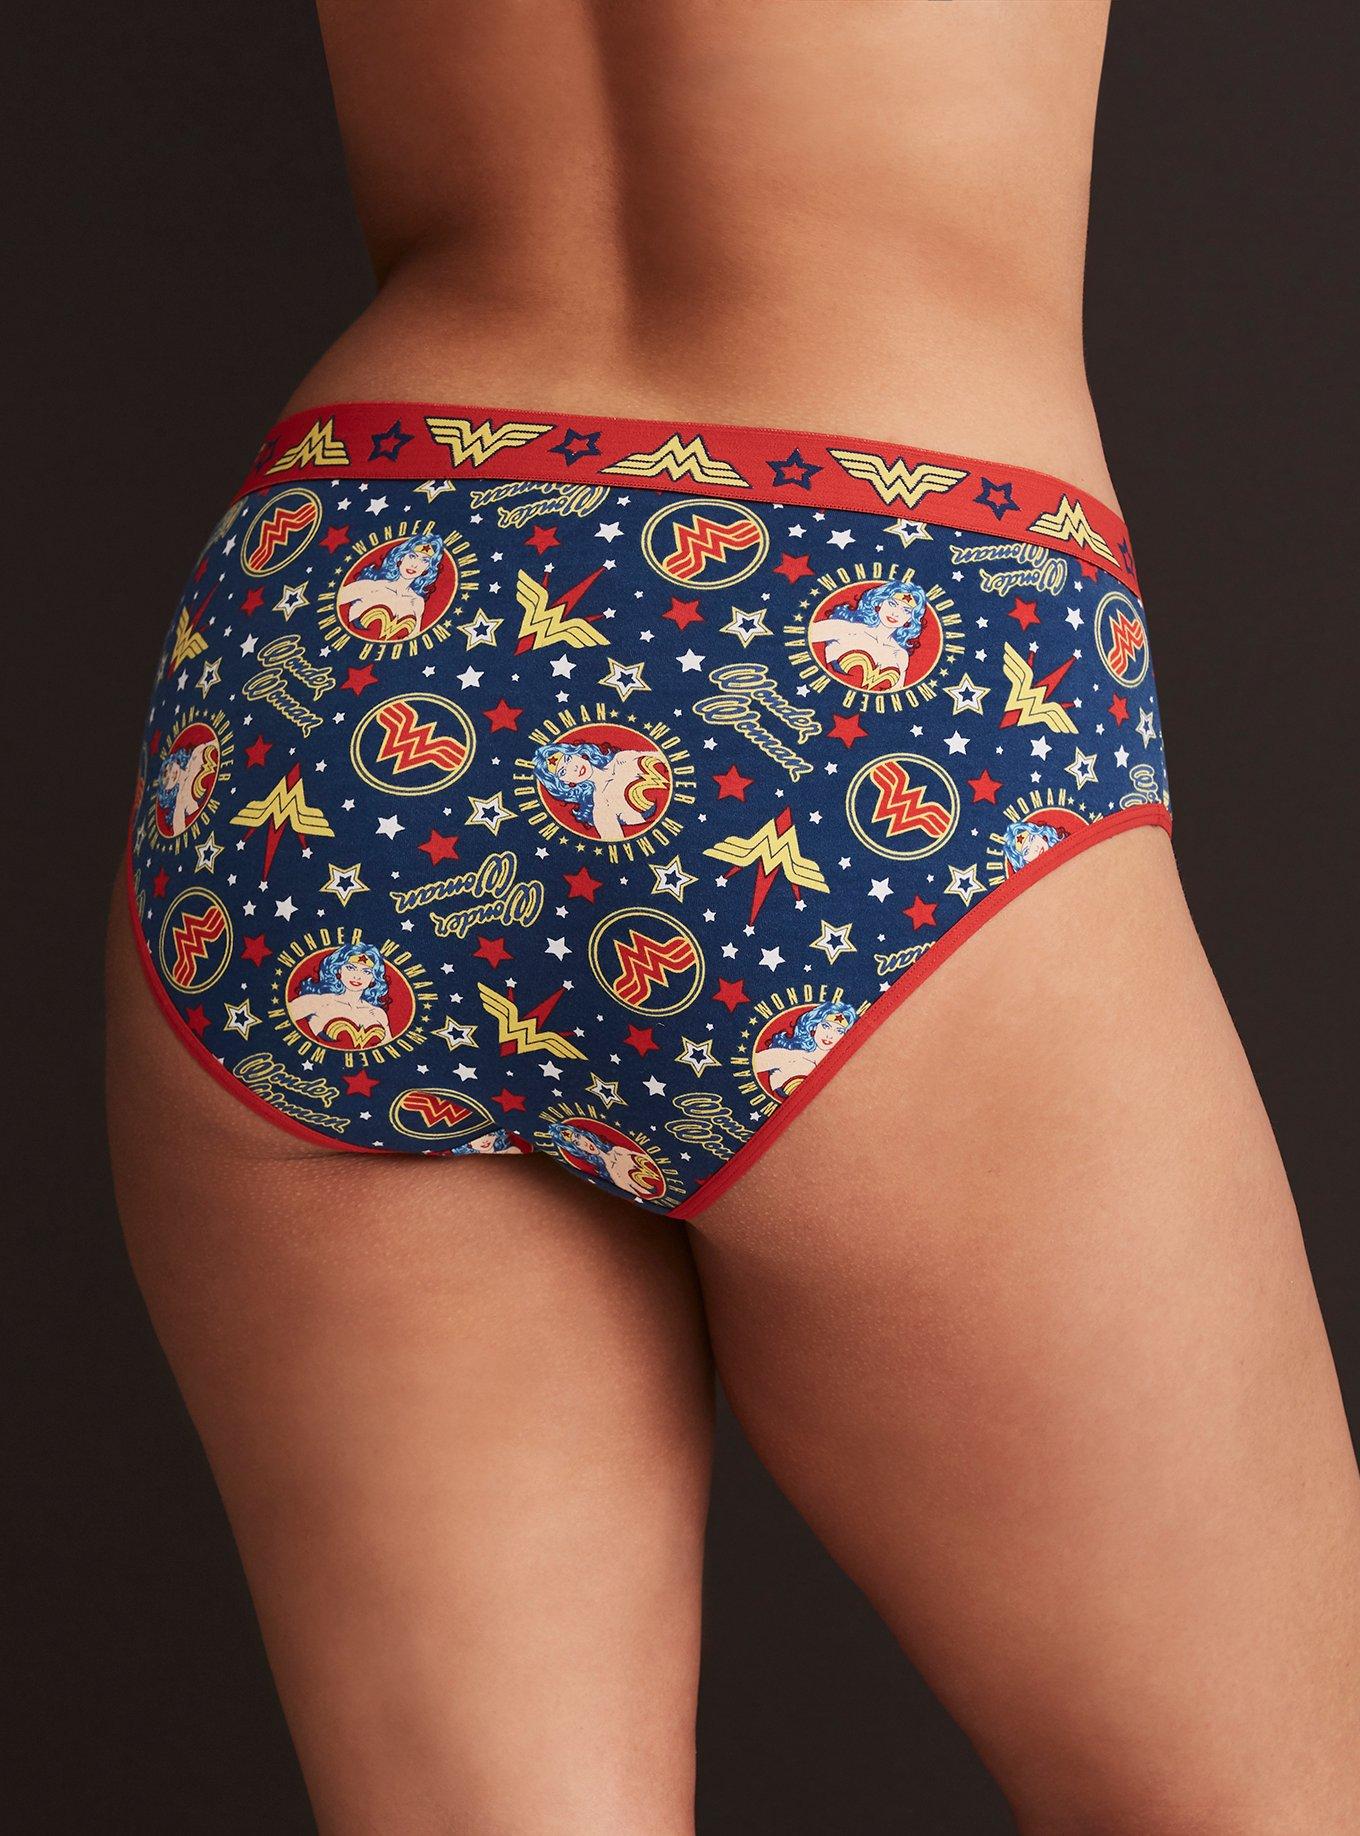 Torrid Cheeky Panties Underwear Marvel Avengers Comics Heads Plus Size 1 14  16